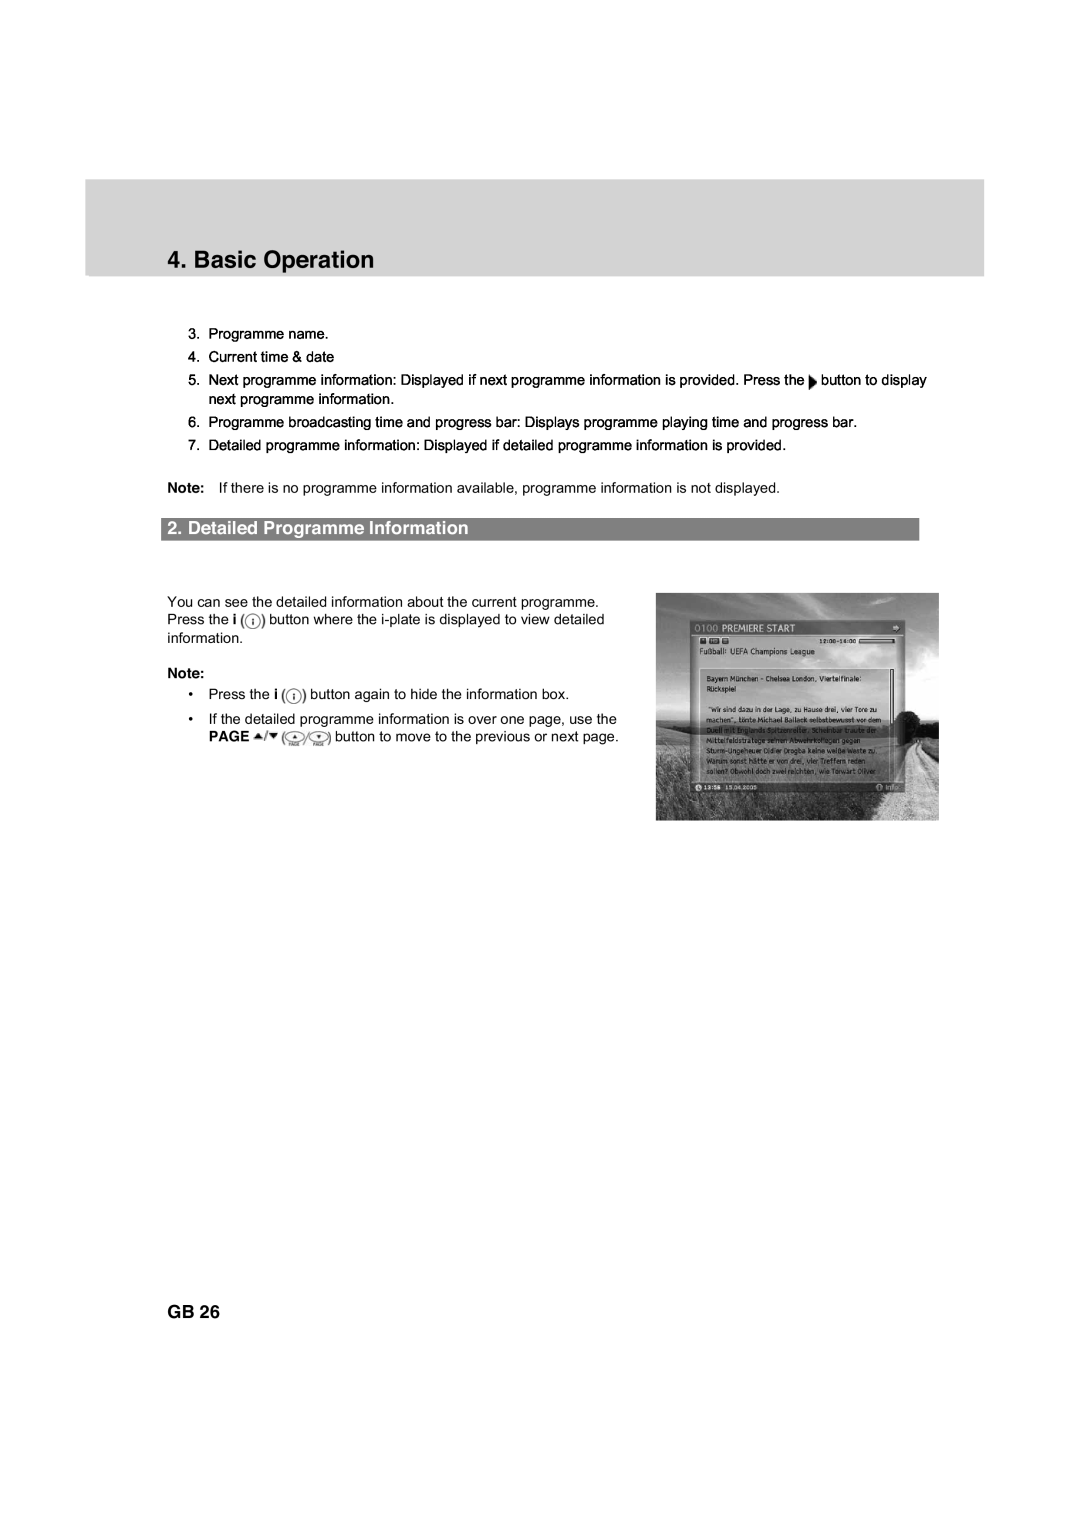 Humax HDCI-2000 manual Detailed Programme Information, Basic Operation 